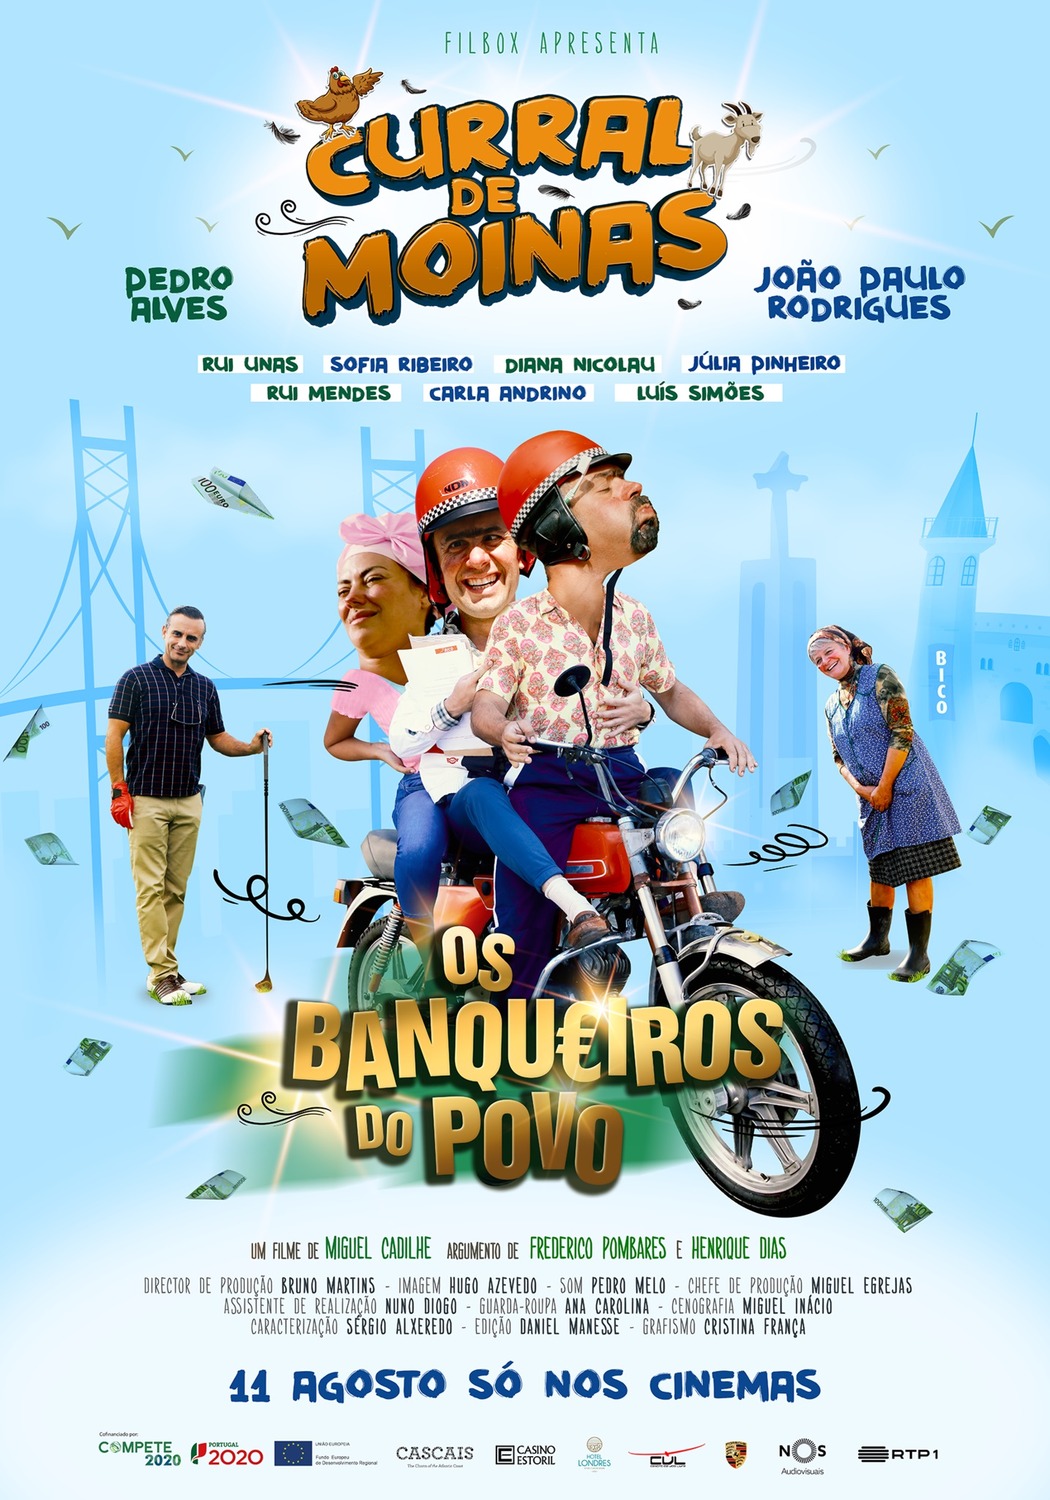 Extra Large Movie Poster Image for Curral de Moinas - Os Banqueiros do Povo 